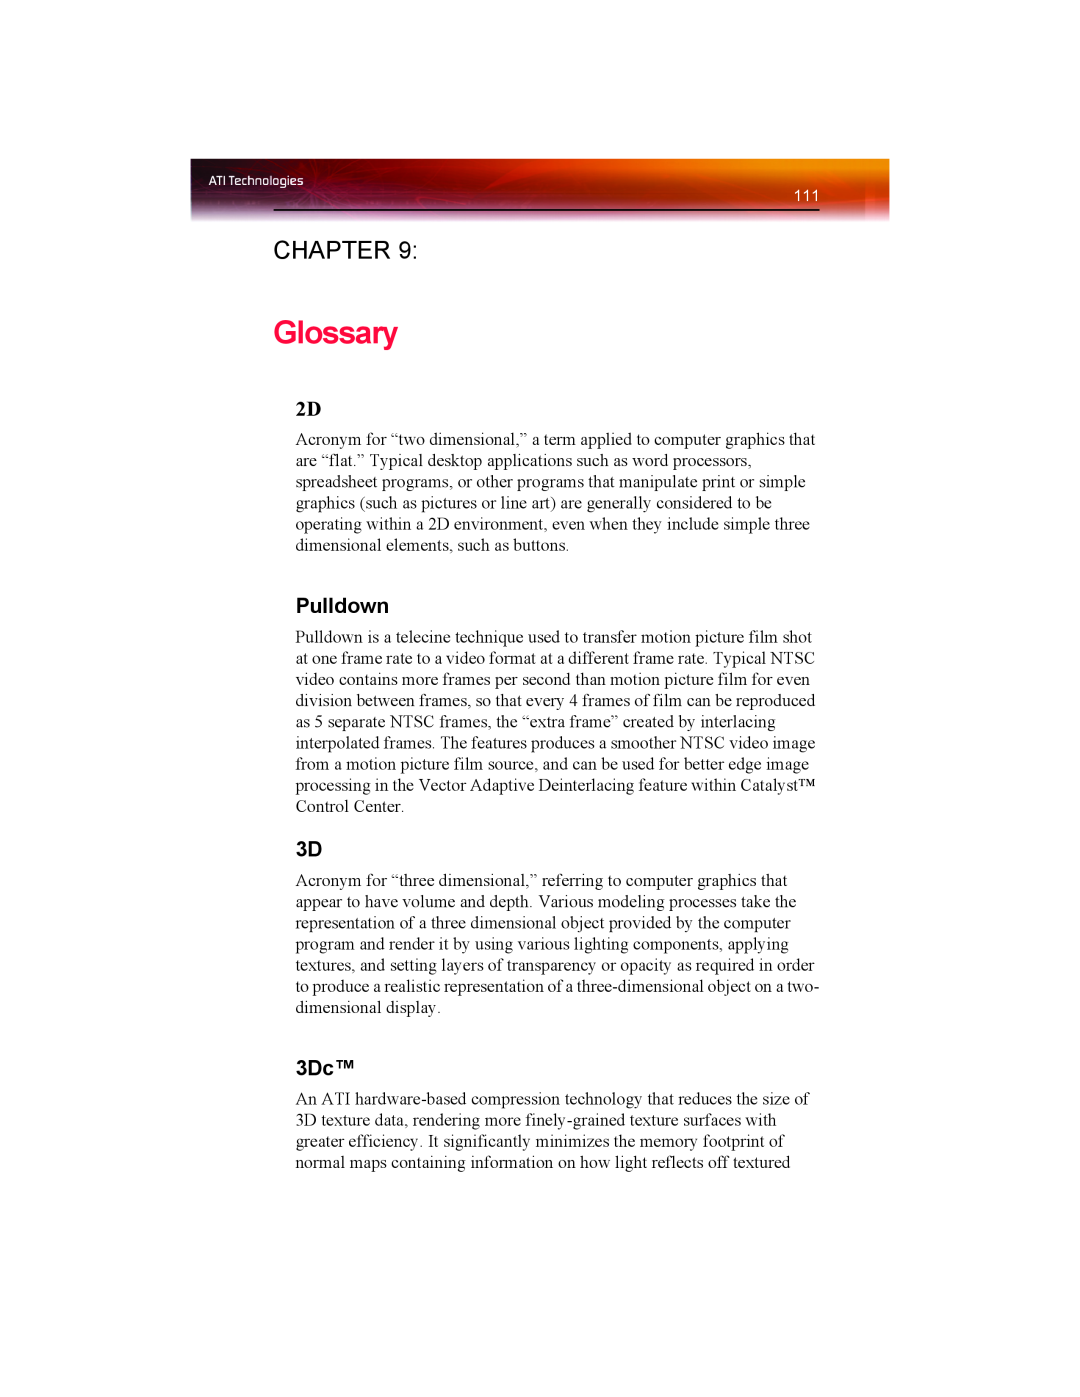 ATI Technologies X1550 SERIES manual Glossary, Chapter, Pulldown 